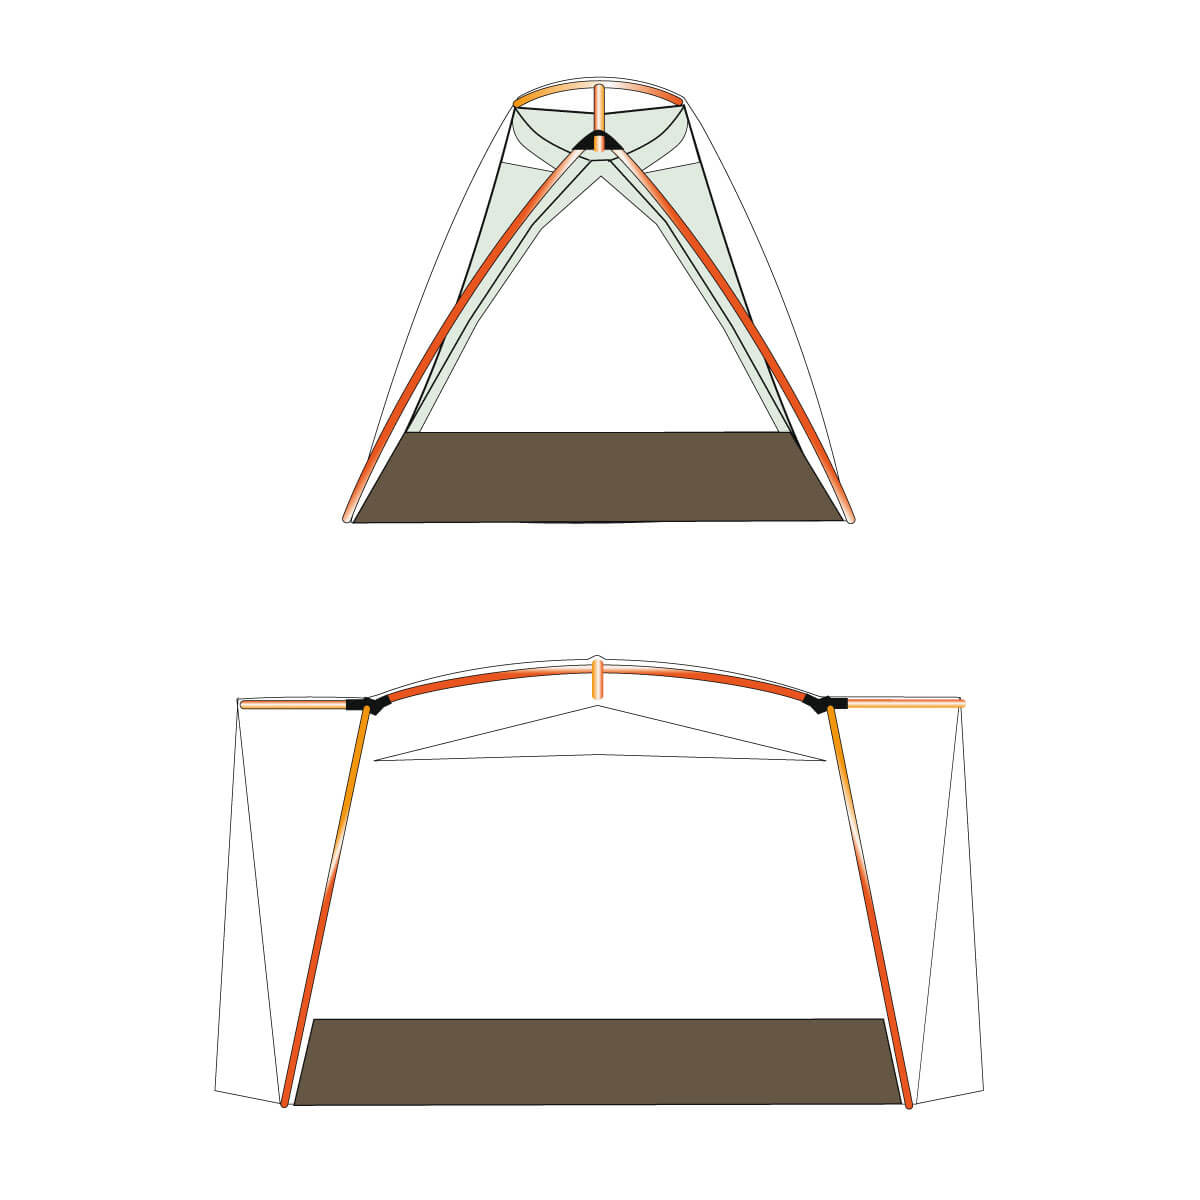 Eureka Timberline SQ 2XT 3 season two person backpacking tent diagram